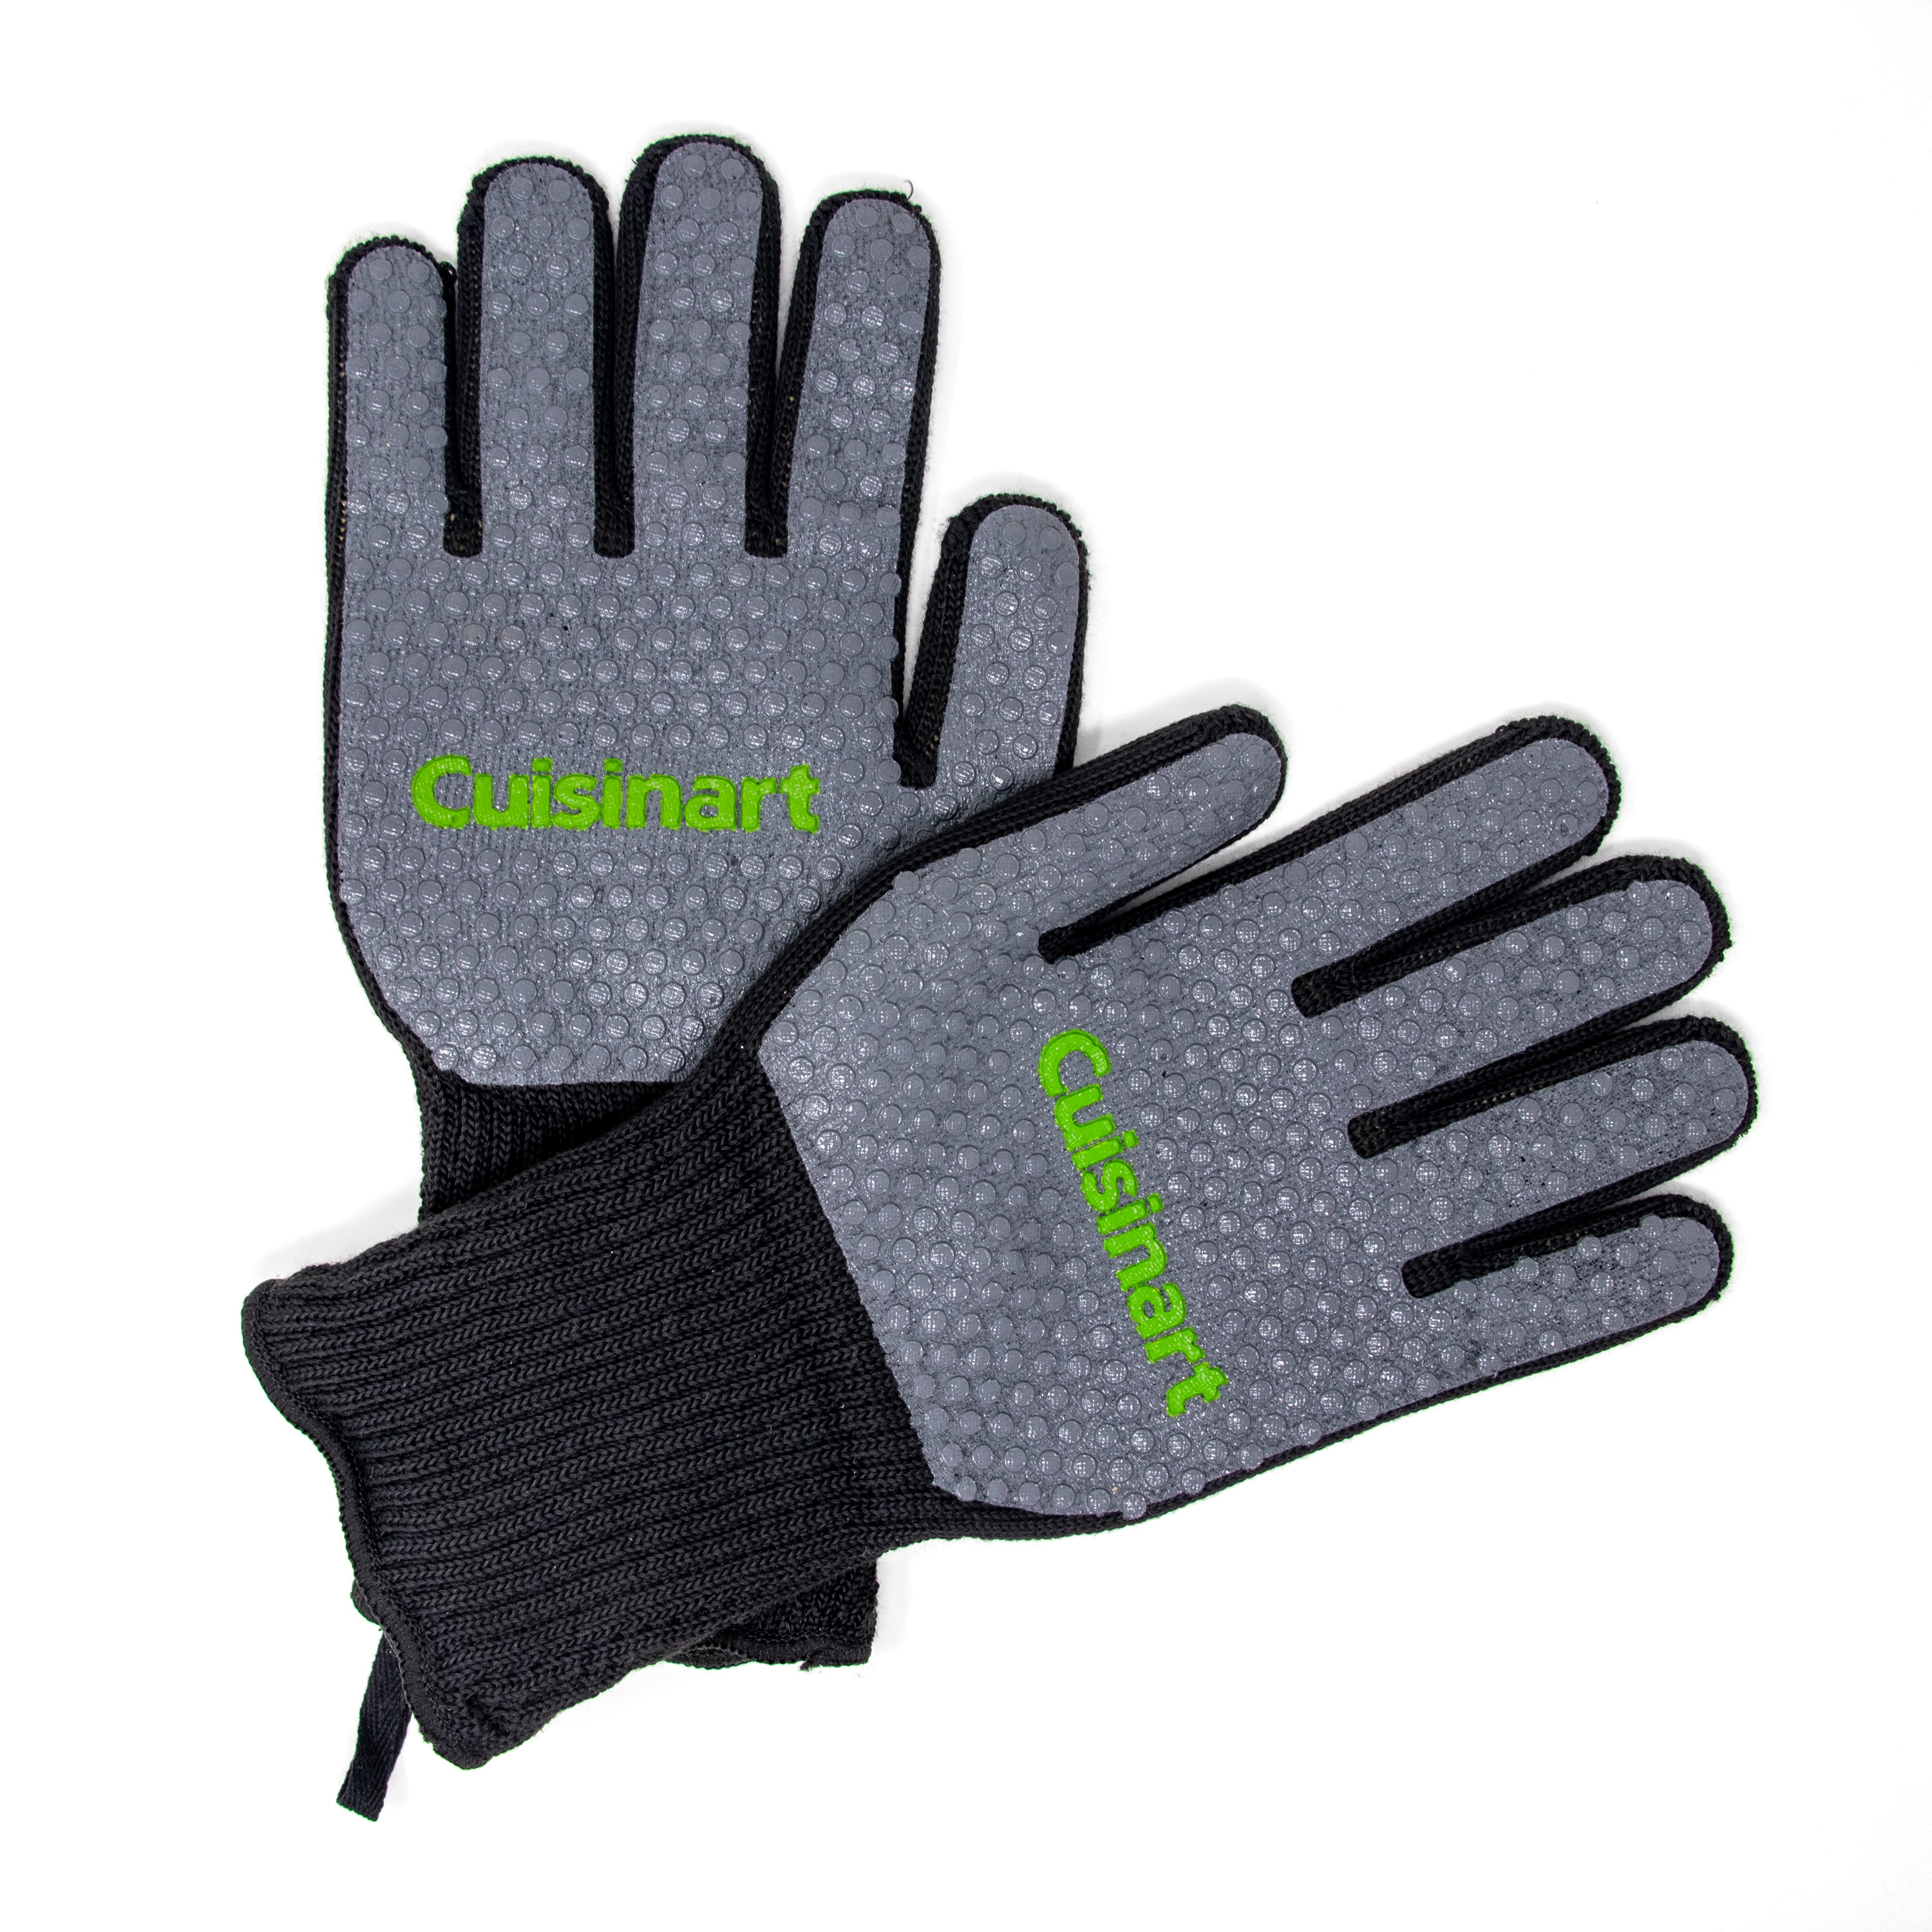 https://www.cuisinart.com/globalassets/cuisinart-image-feed/cgm-200/cgm-200_full-coverage-heat-resistant-grill-gloves_set.jpg